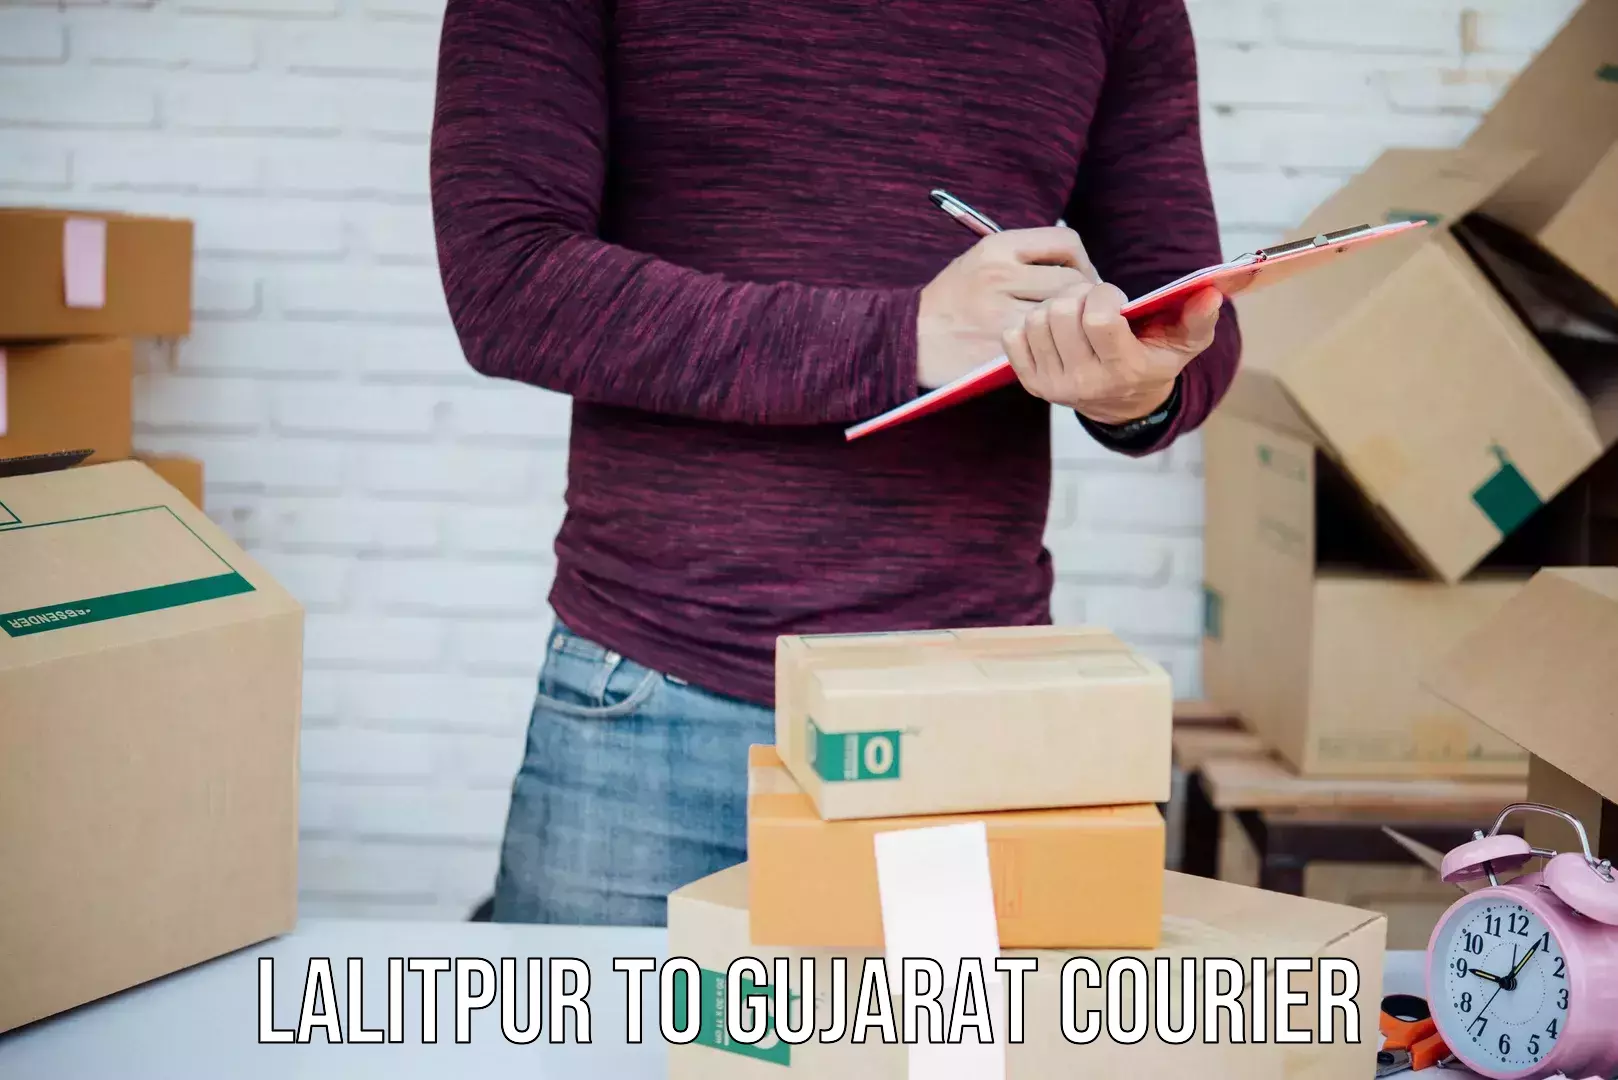 Logistics and distribution Lalitpur to Gujarat